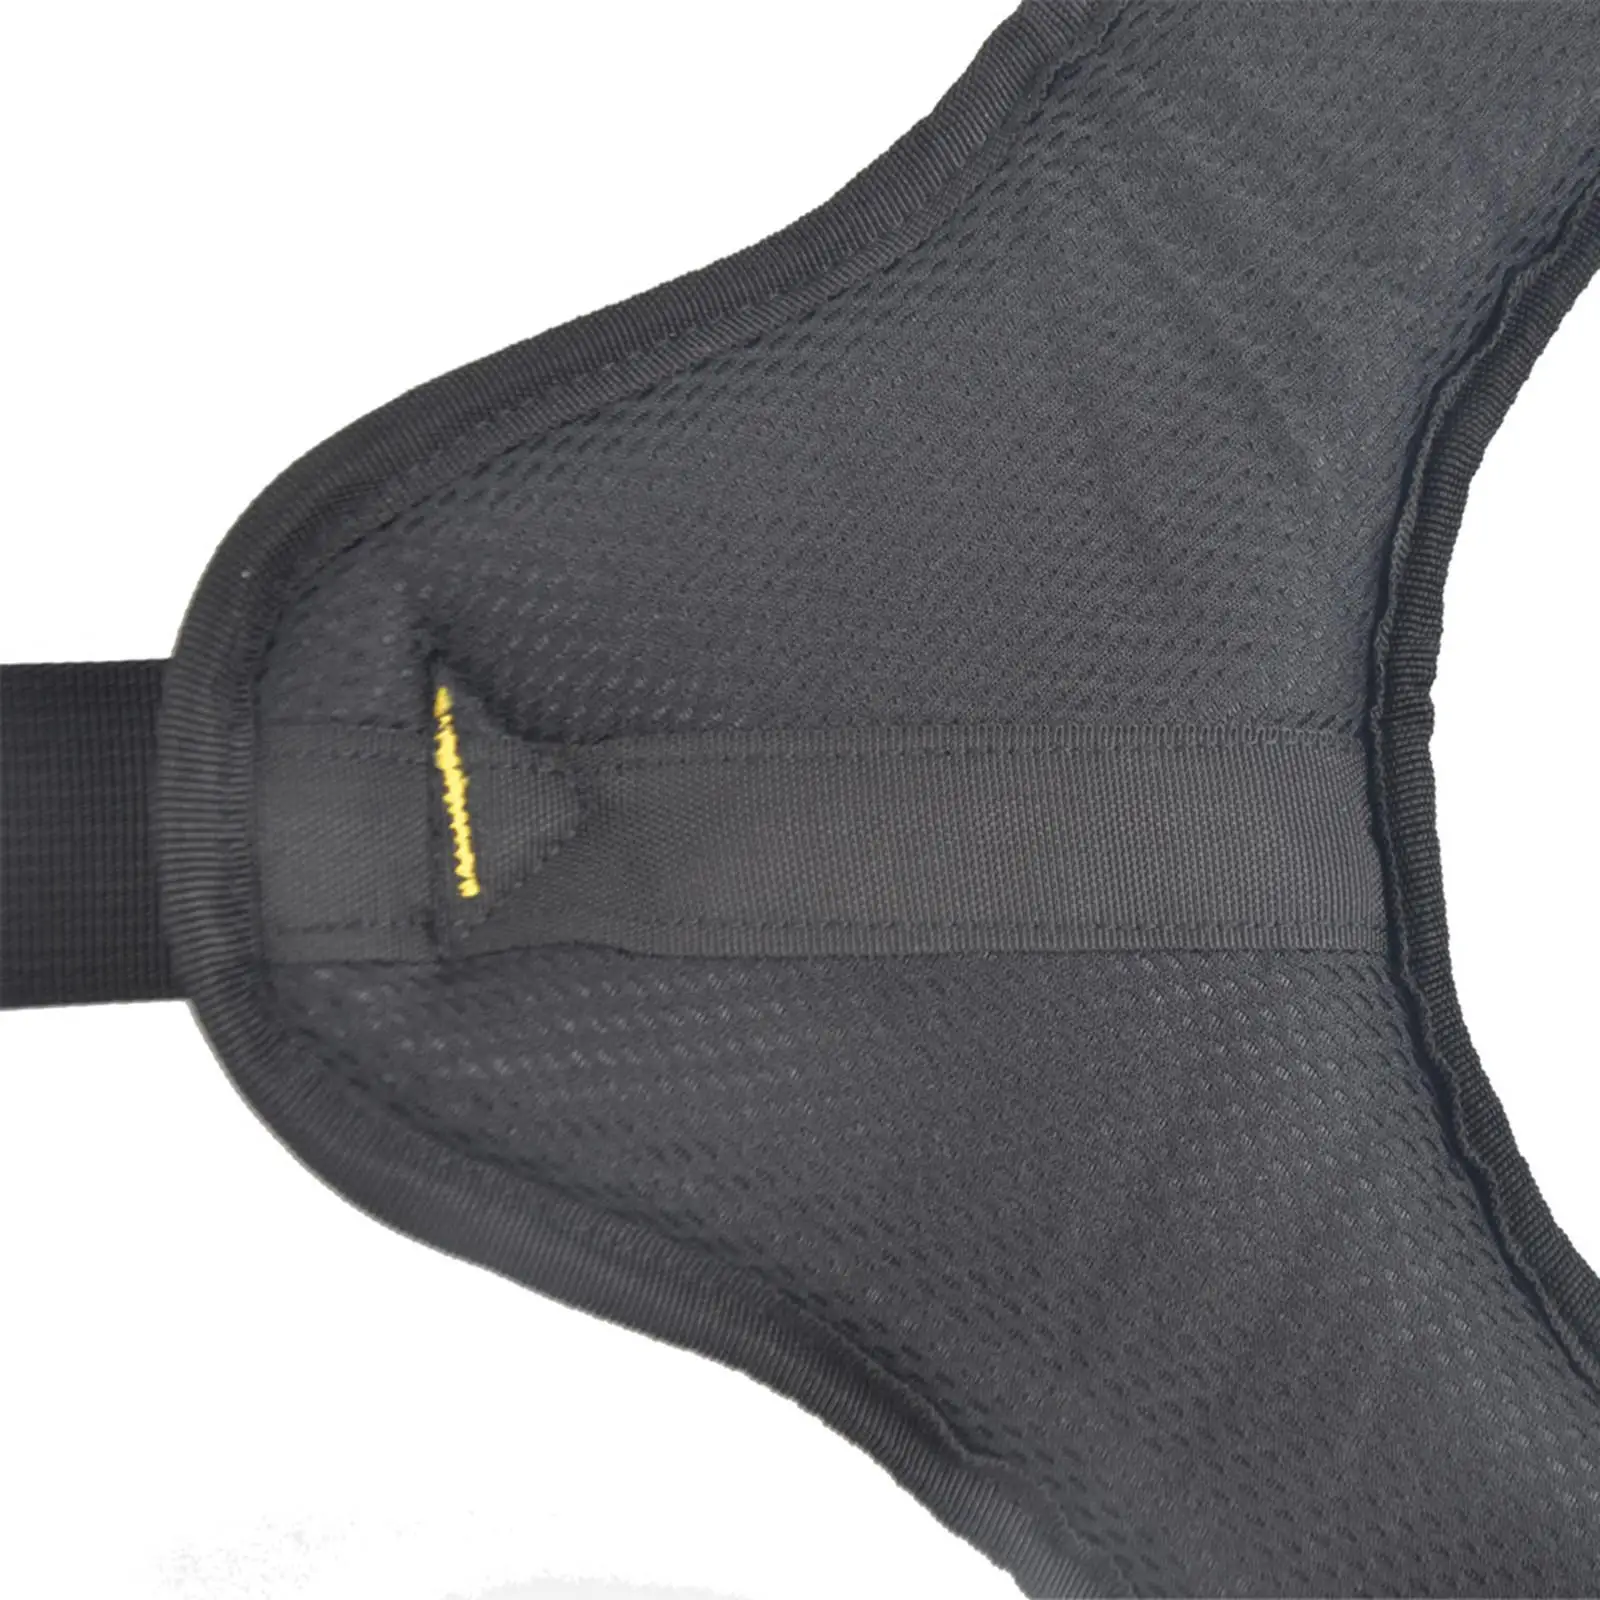 Tool Belt Suspender Construction Tools Heavy Duty 3 Loops Adjustable Shoulder Straps Work Suspenders Belt Harness for Carpenter